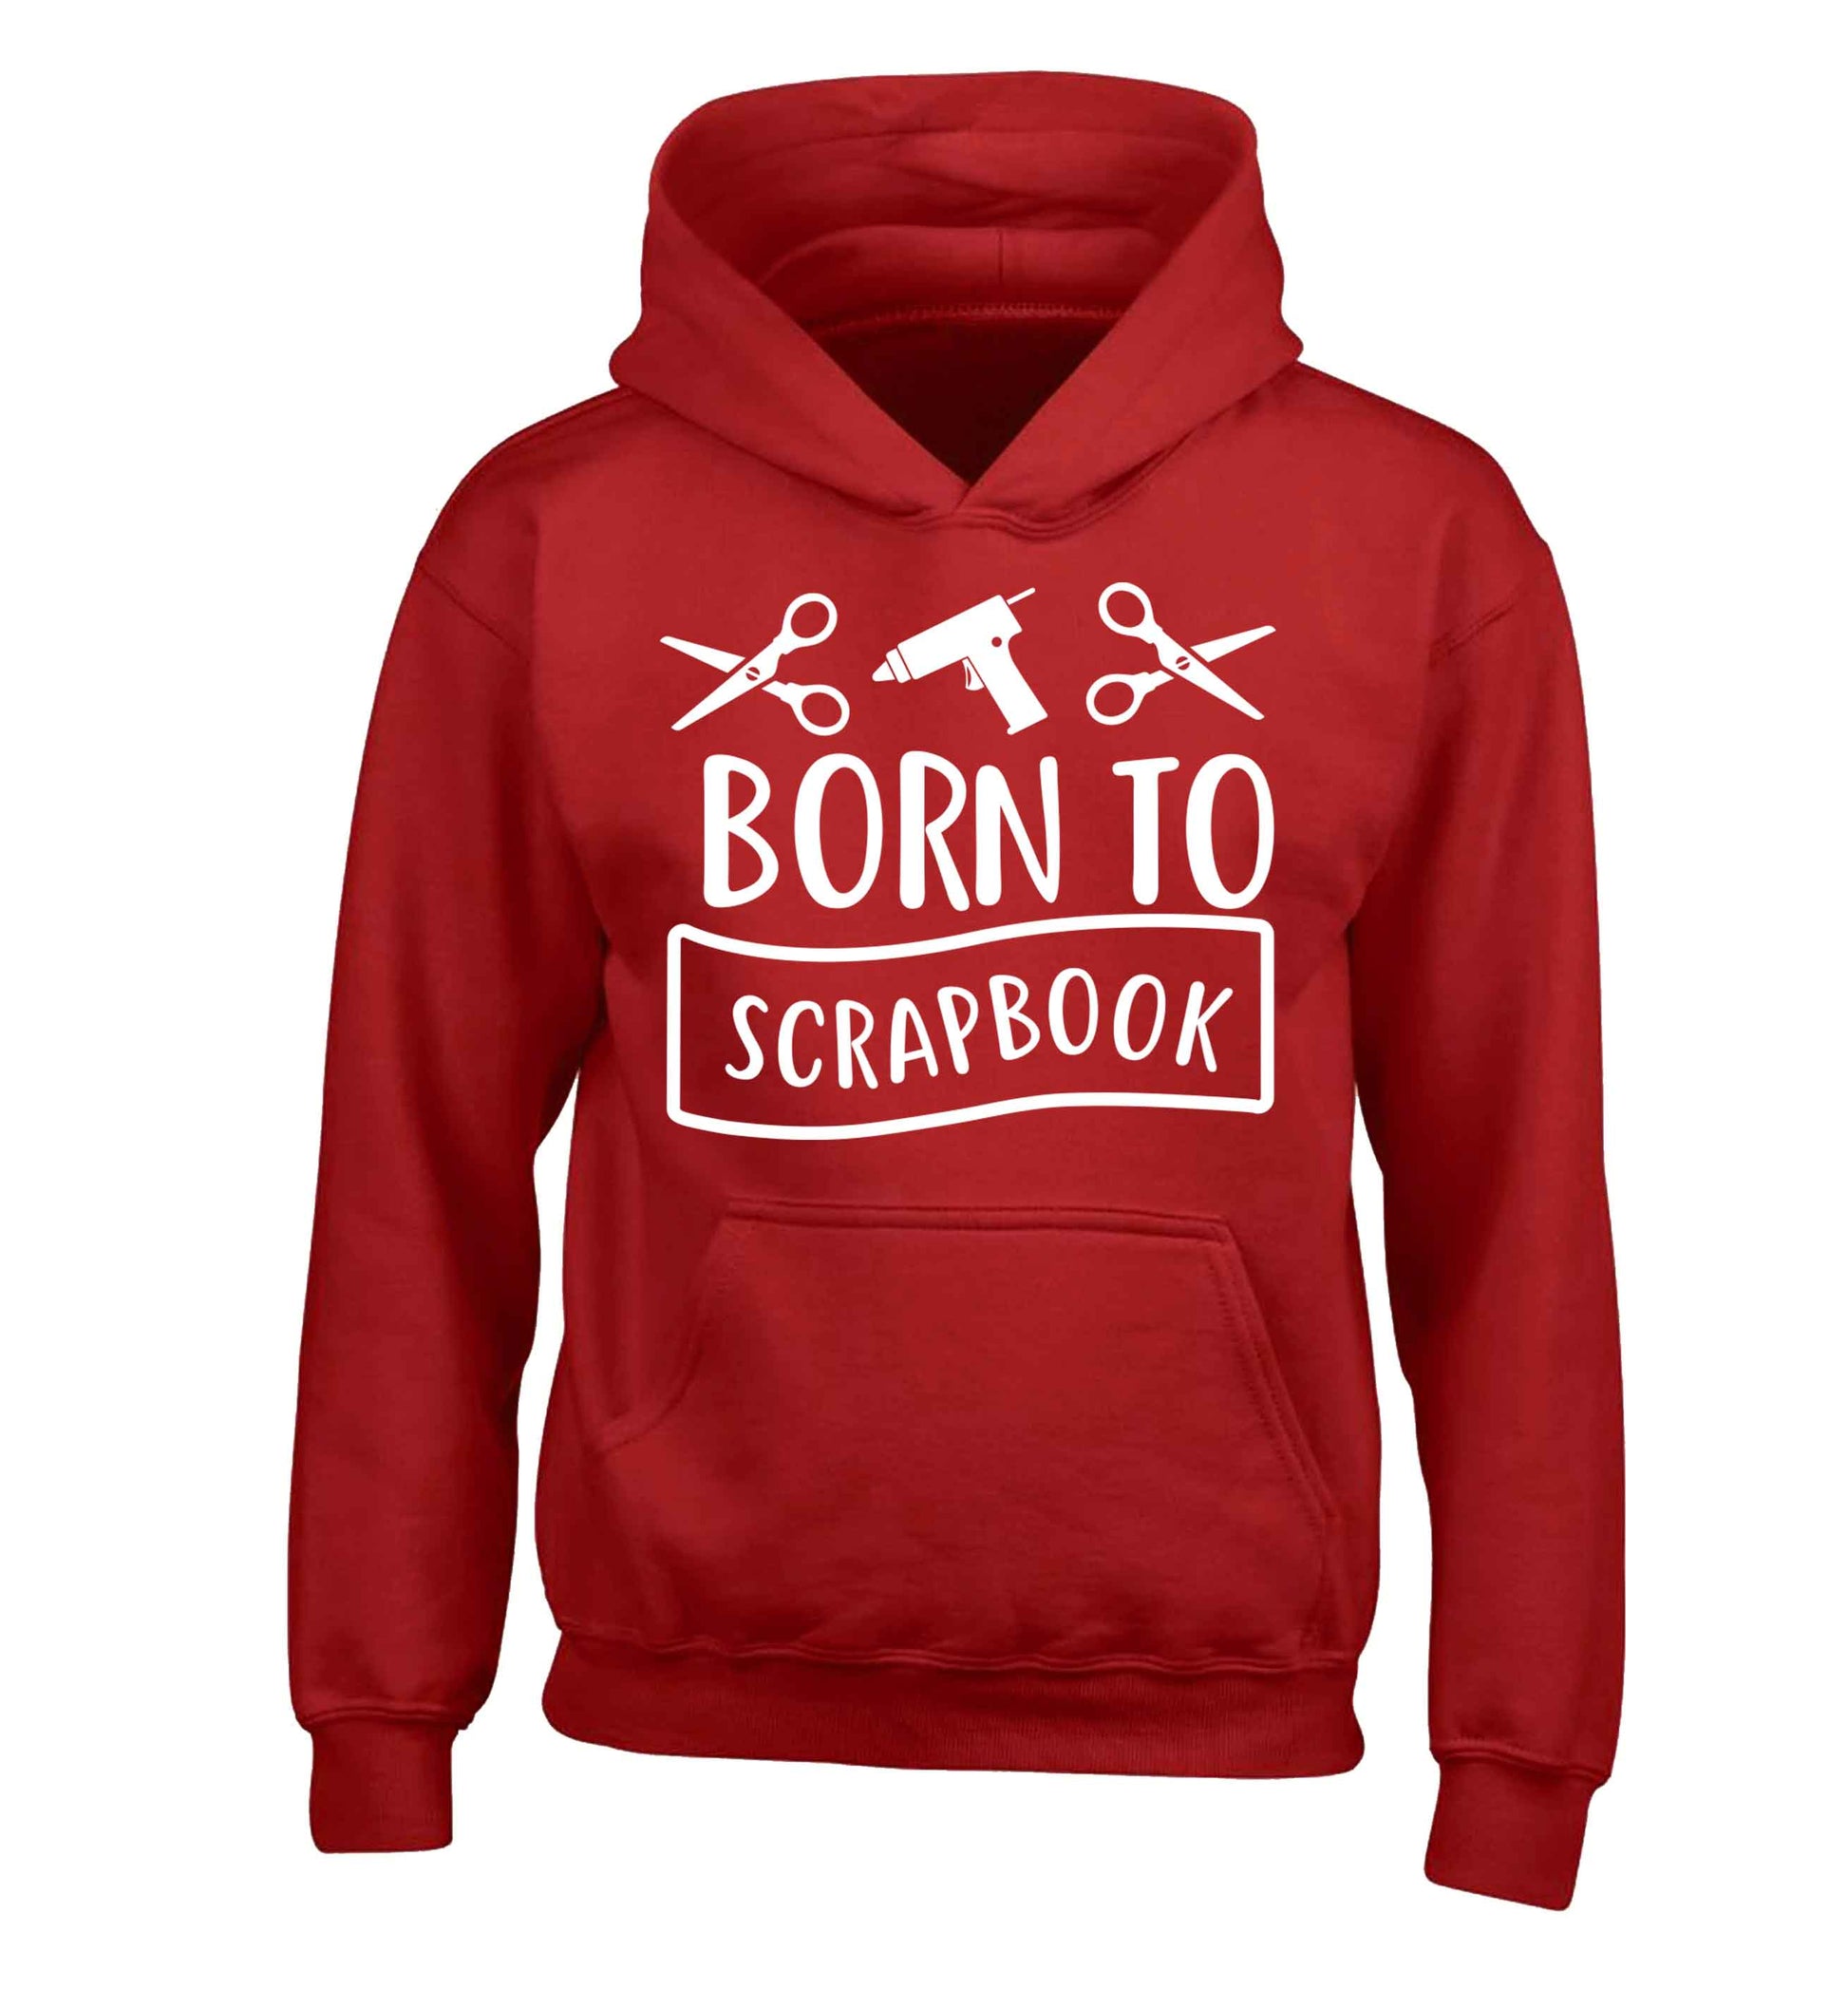 Born to scrapbook children's red hoodie 12-13 Years